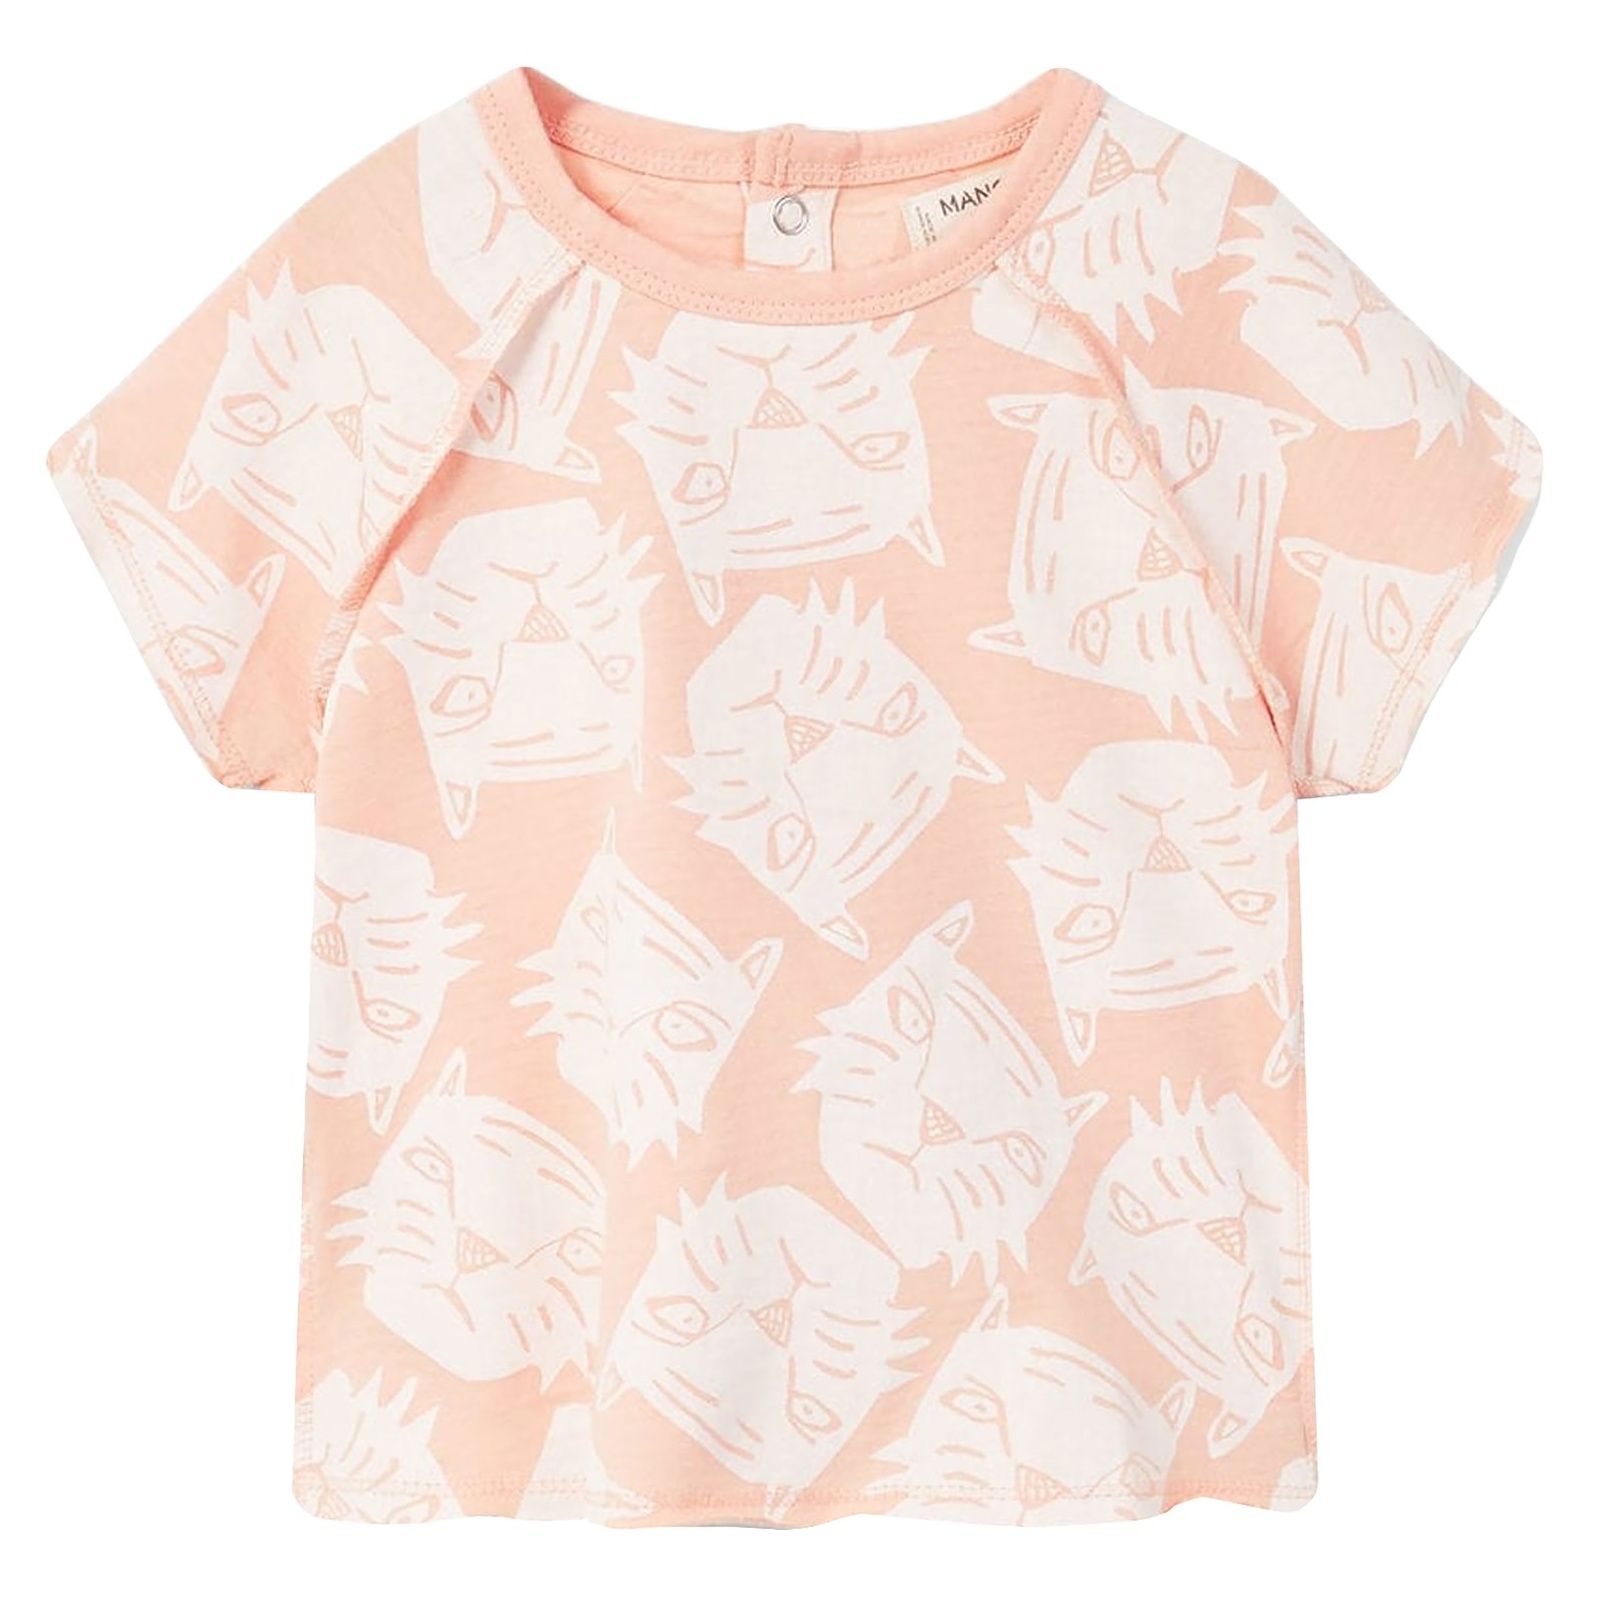 تی شرت نخی یقه گرد پسرانه - مانگو - نارنجي  - 1